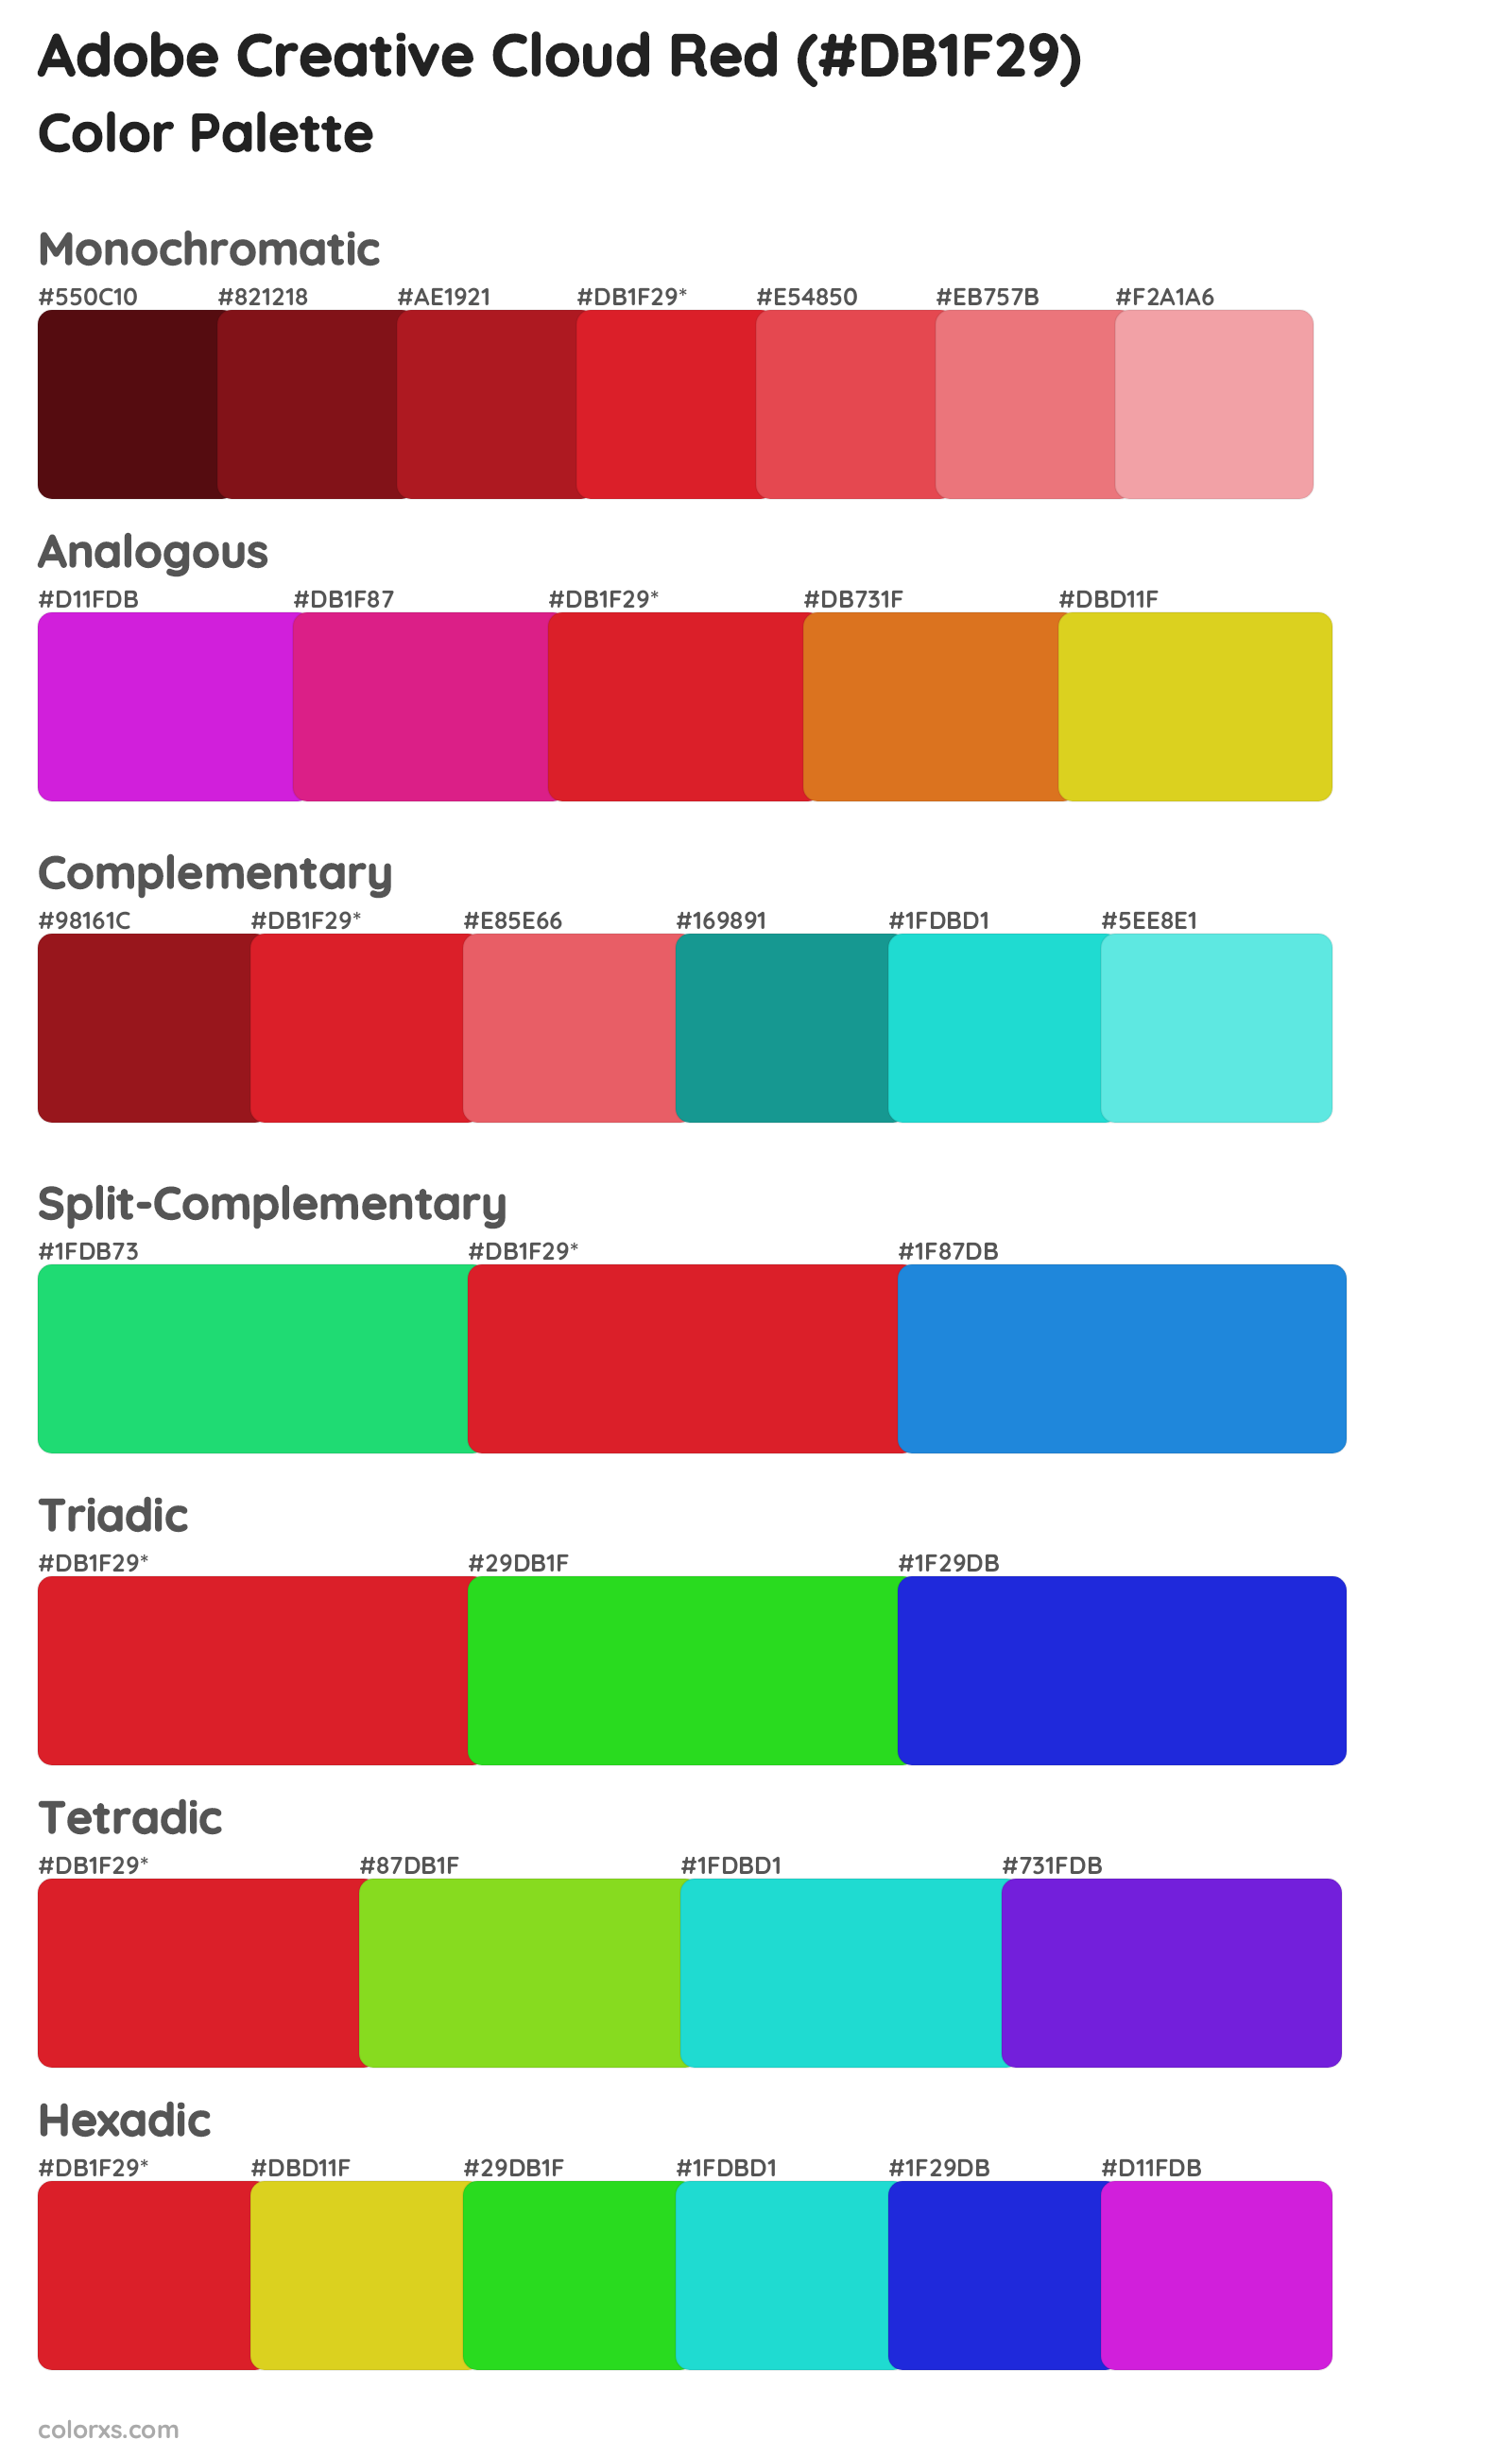 Adobe Creative Cloud Red Color Scheme Palettes